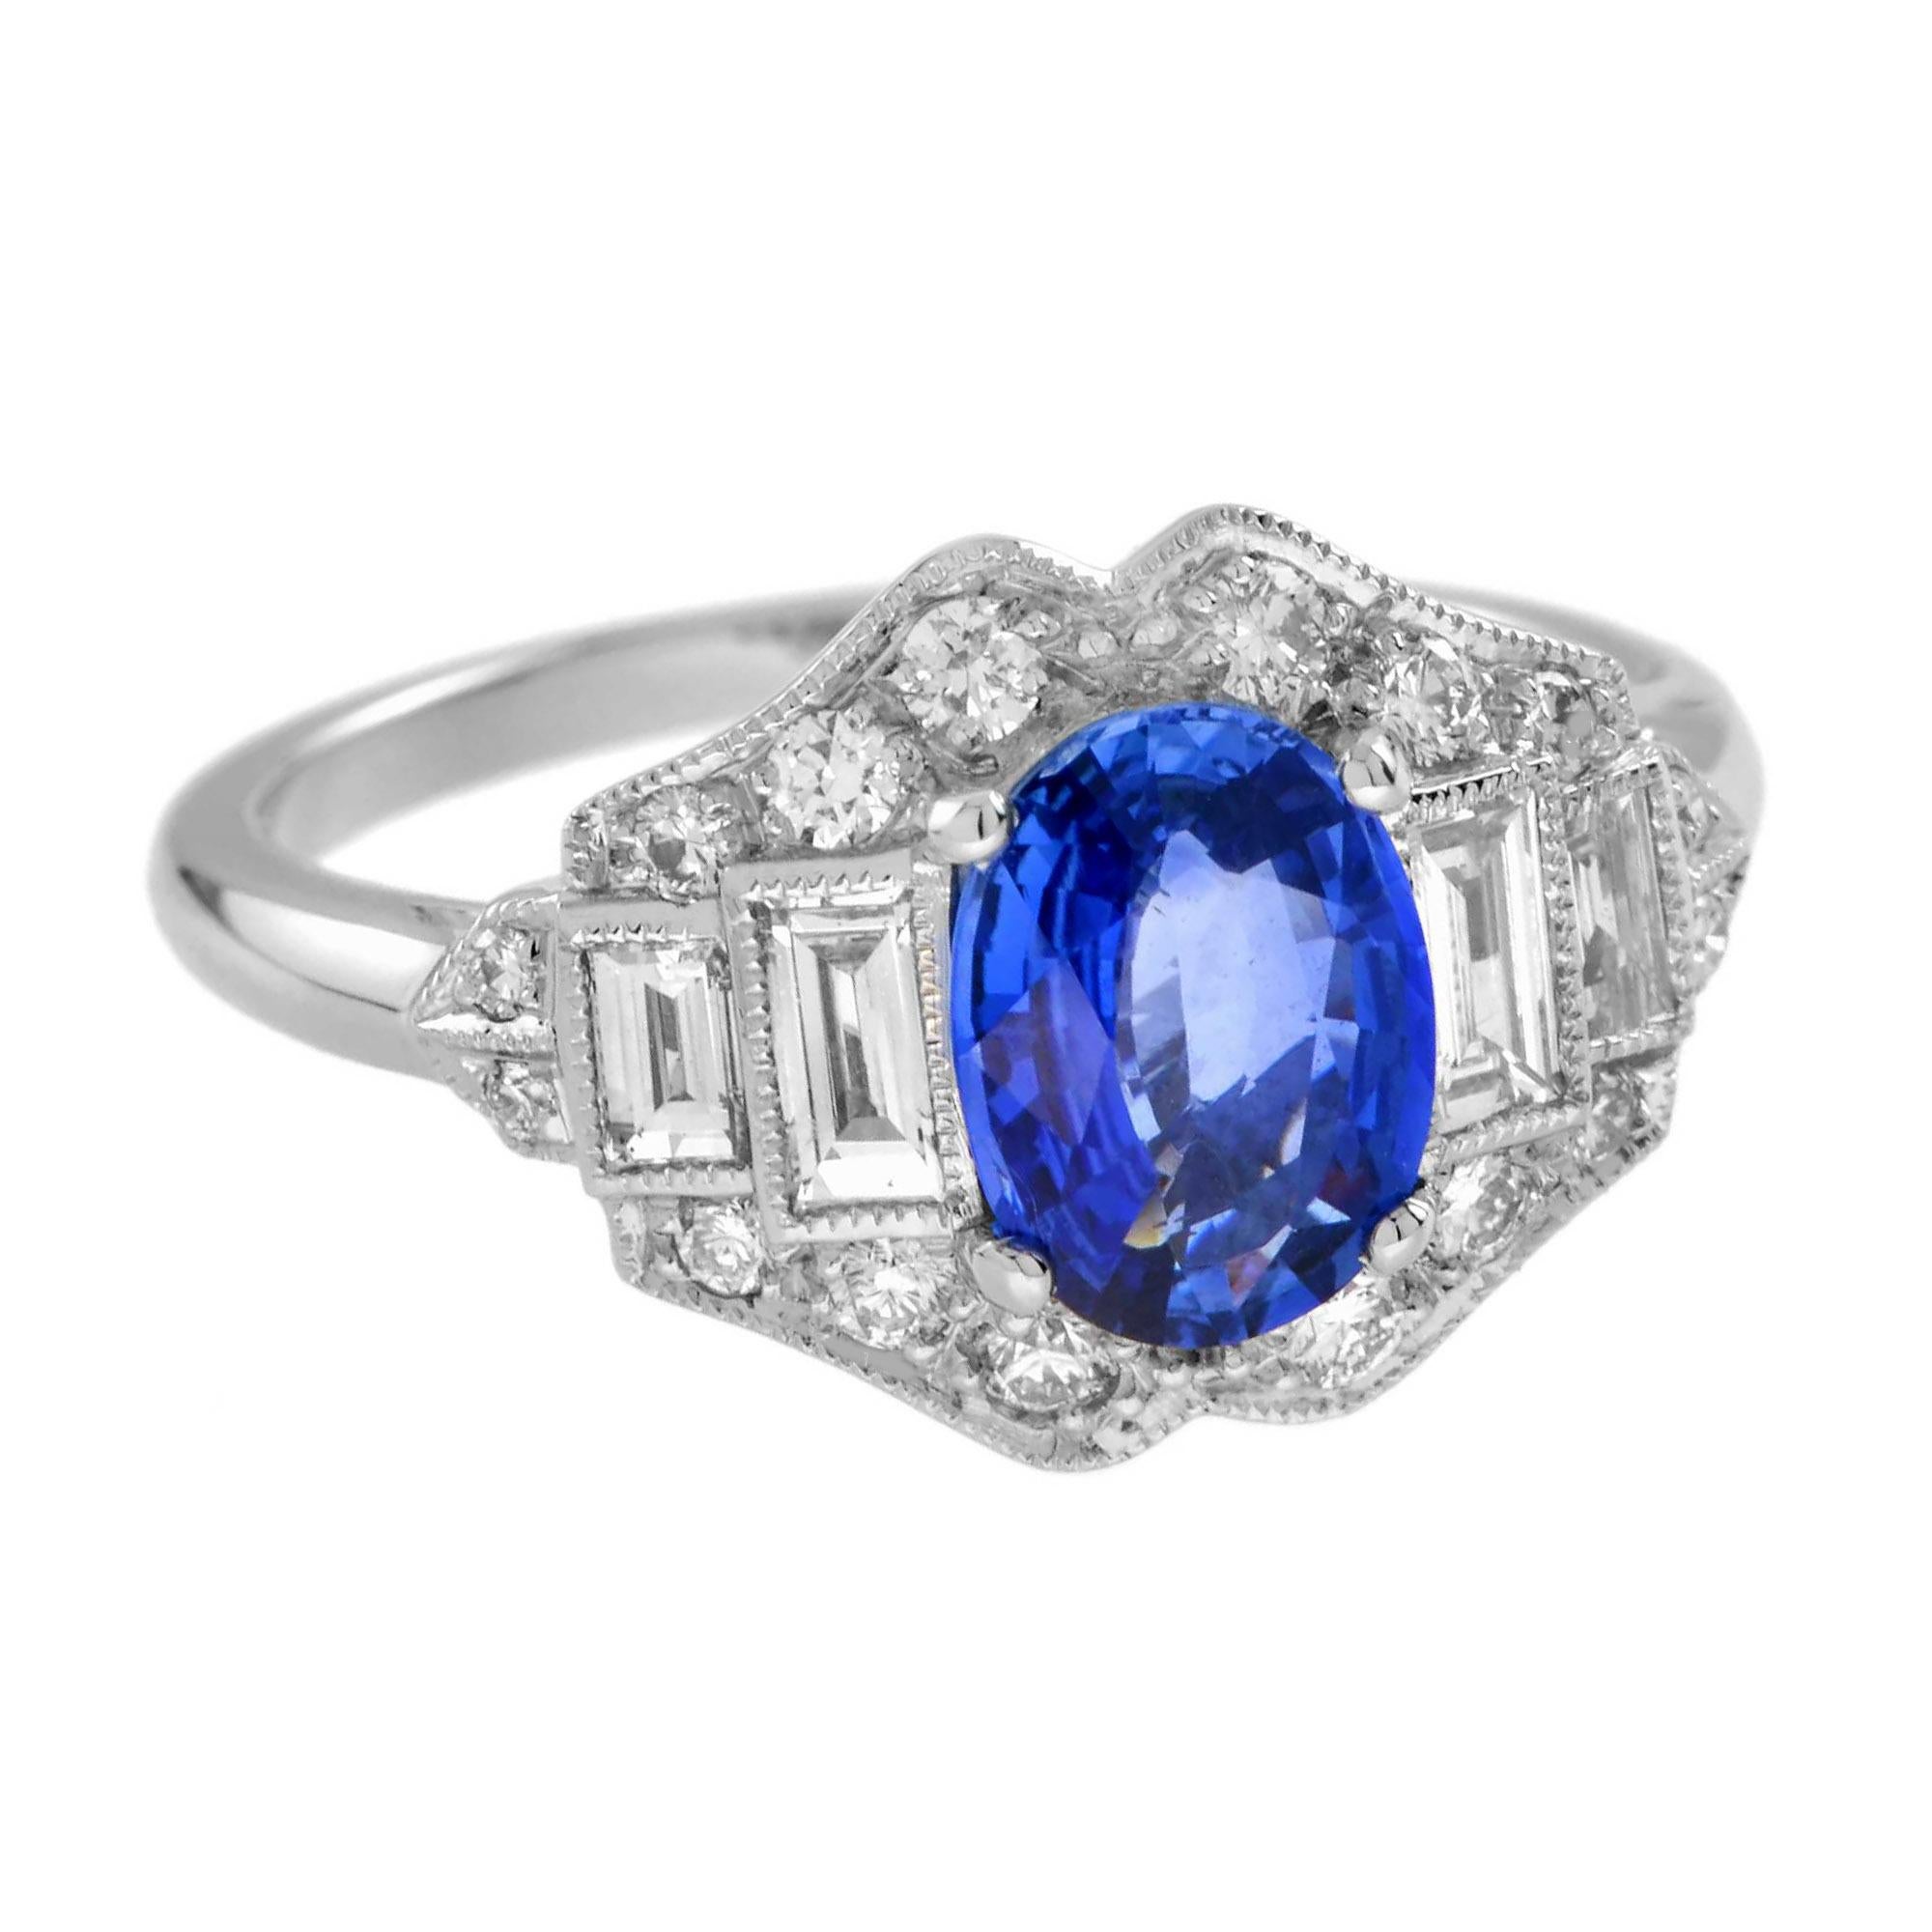 Women's Ceylon Sapphire and Diamond Art Deco Style Engagement Ring in 18k White Gold